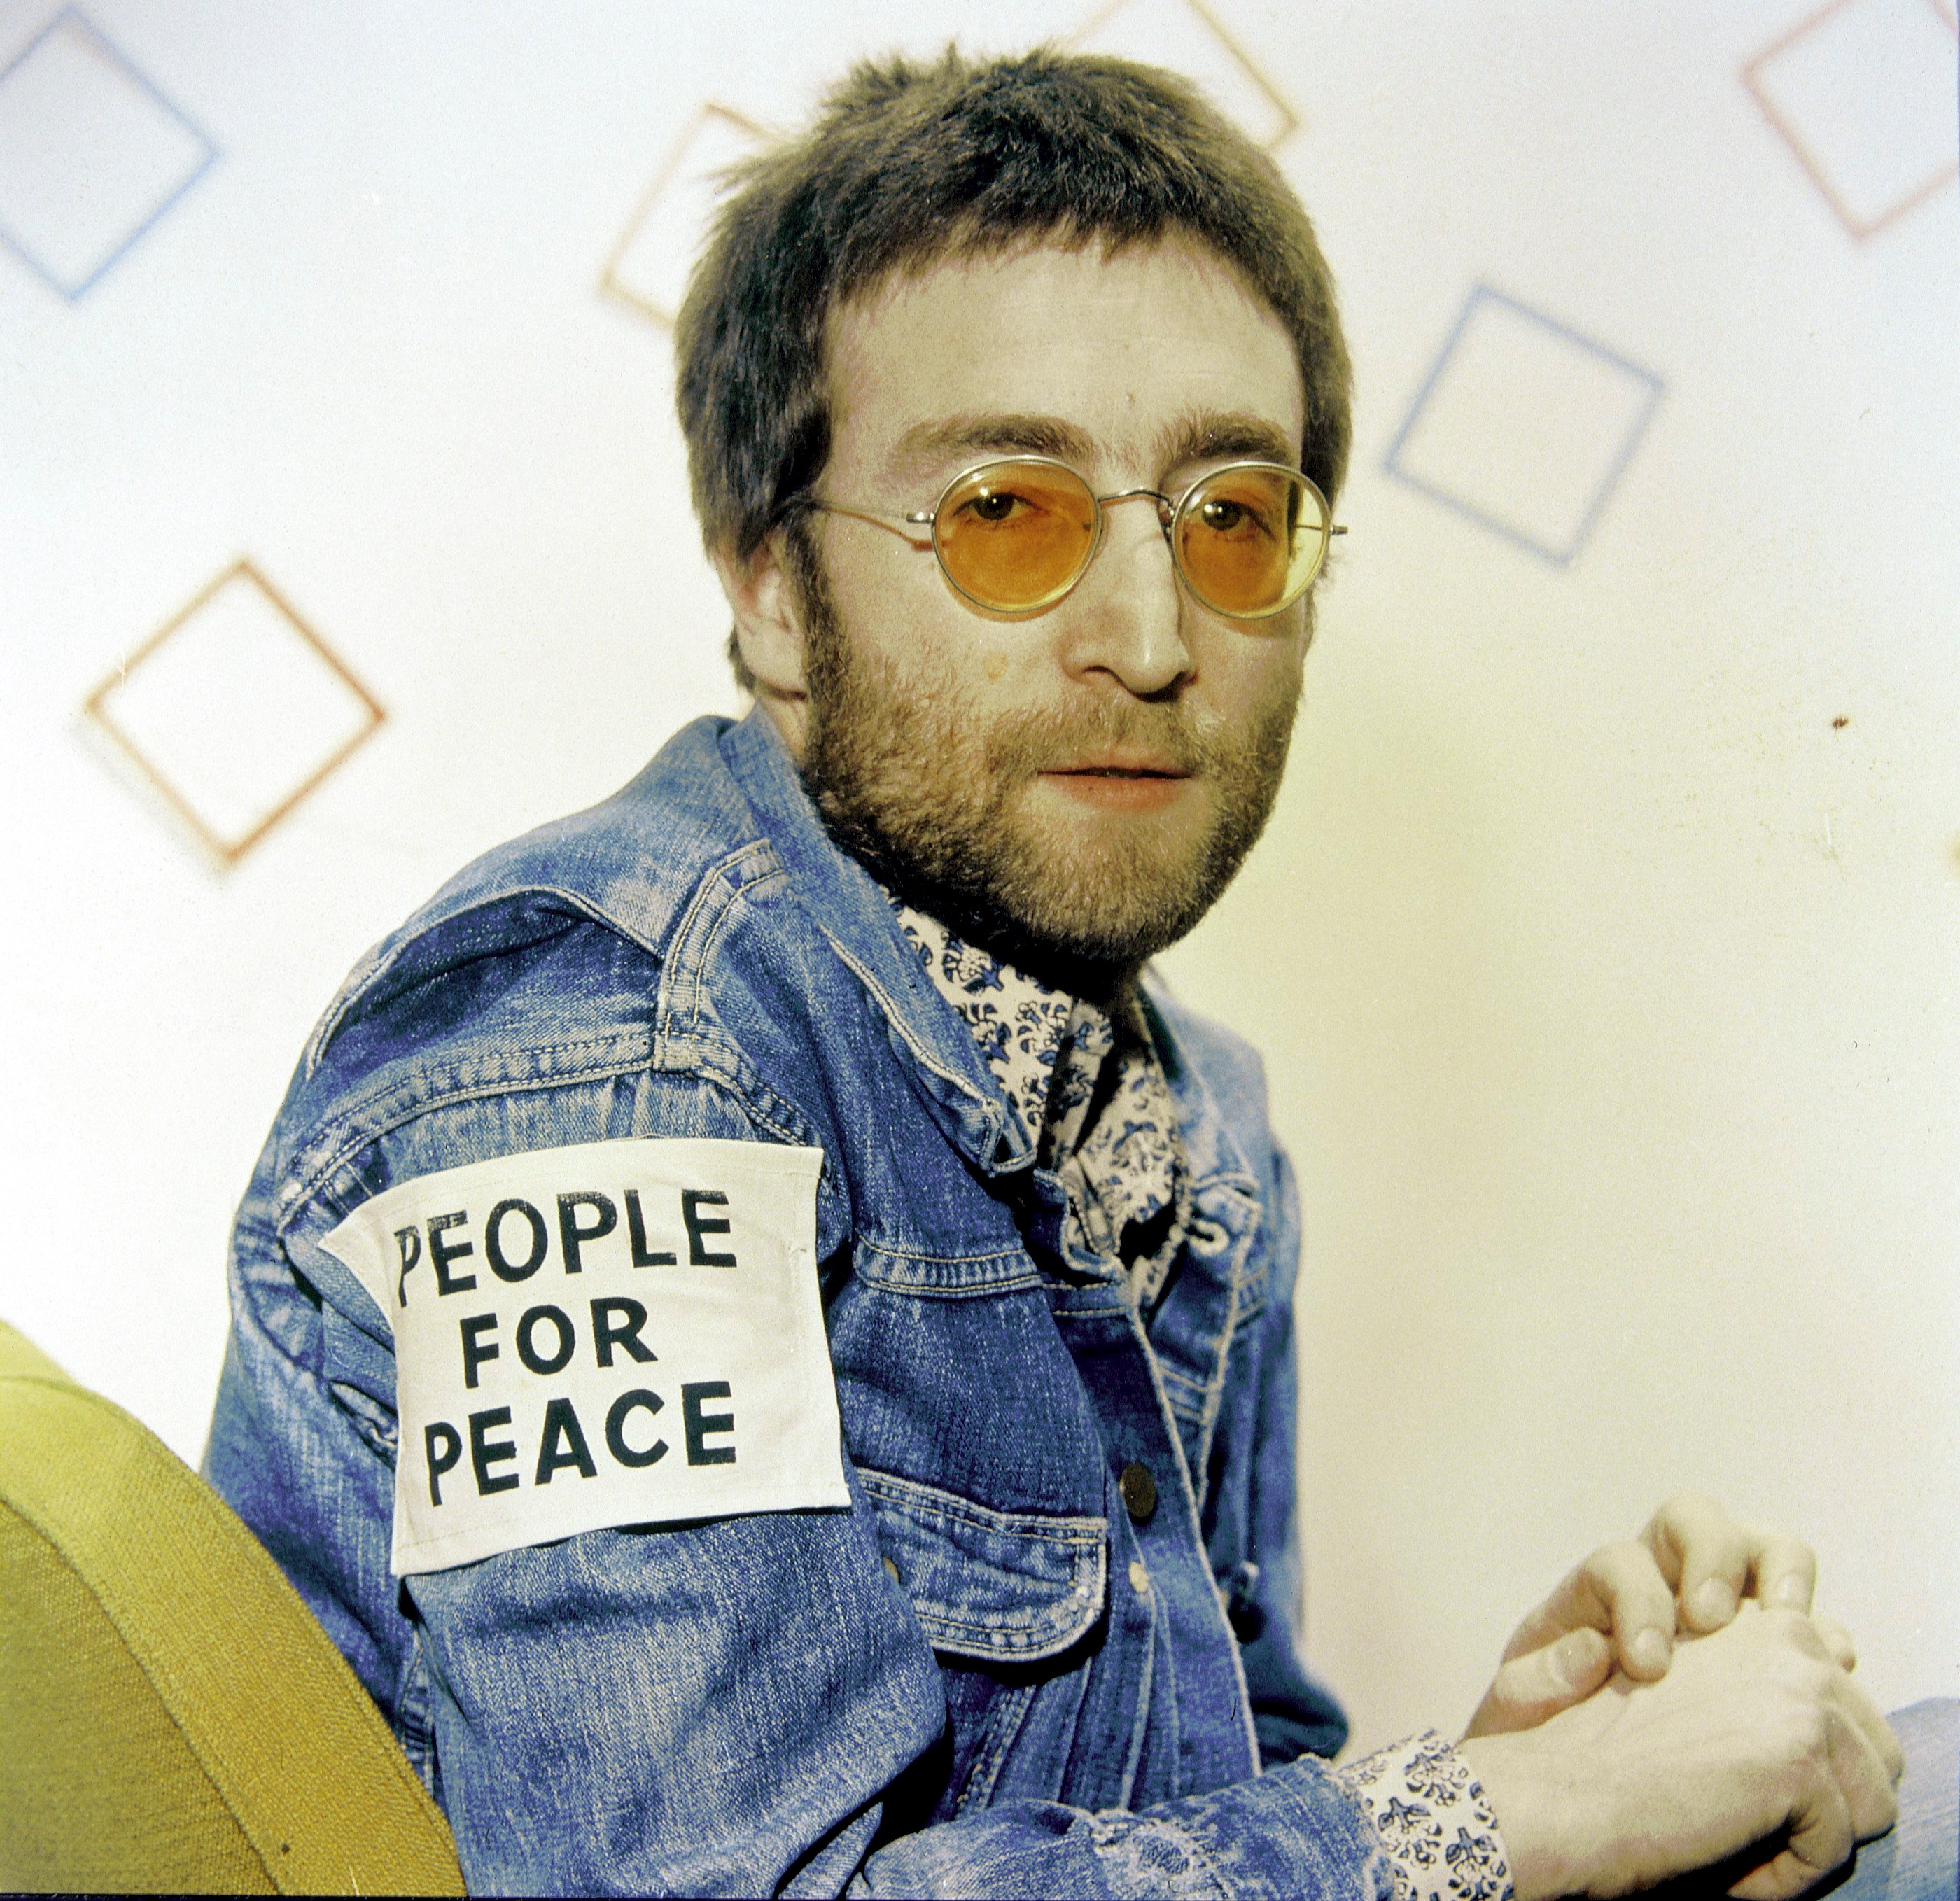 John Lennon wearing blue during his "Imagine" era